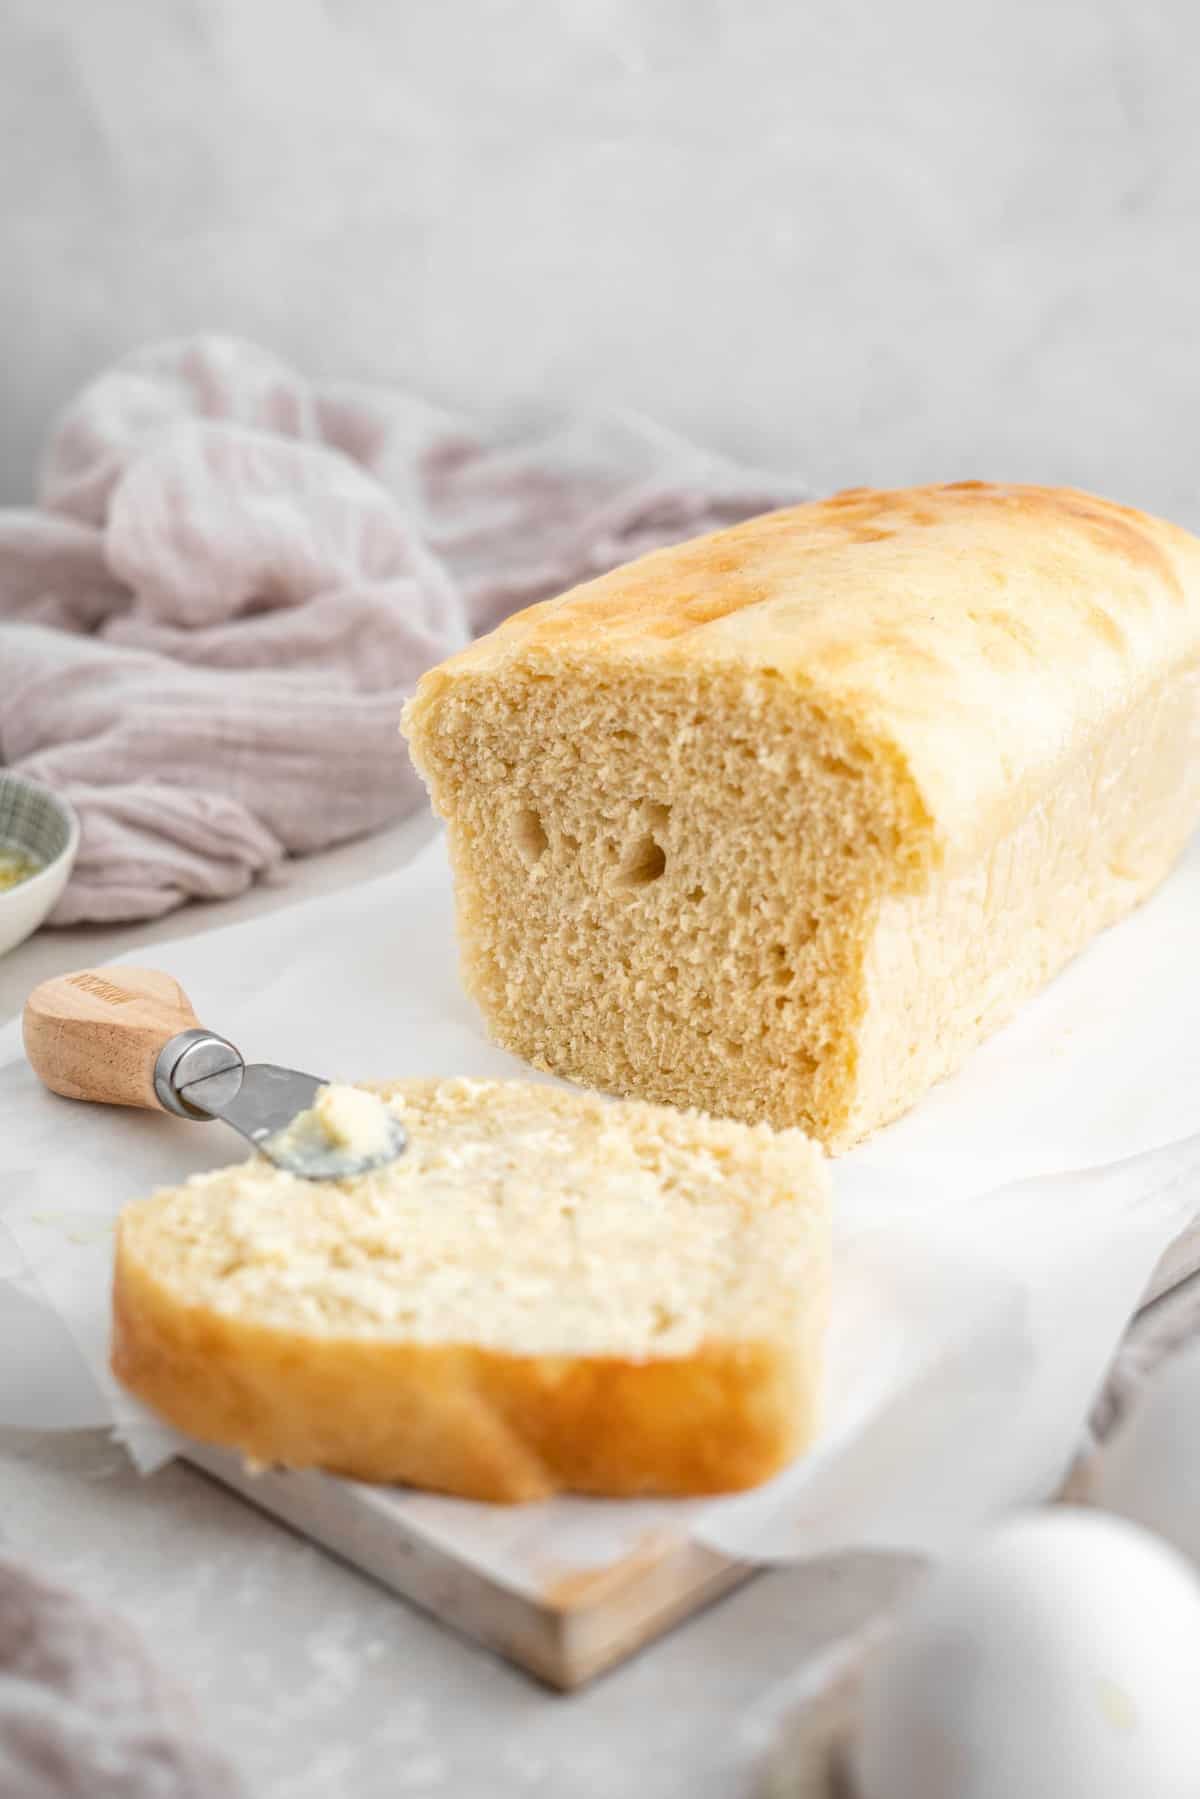 Tasty KETO BREADS with almond flour / GLUTEN FREE / SUPER SOFT 